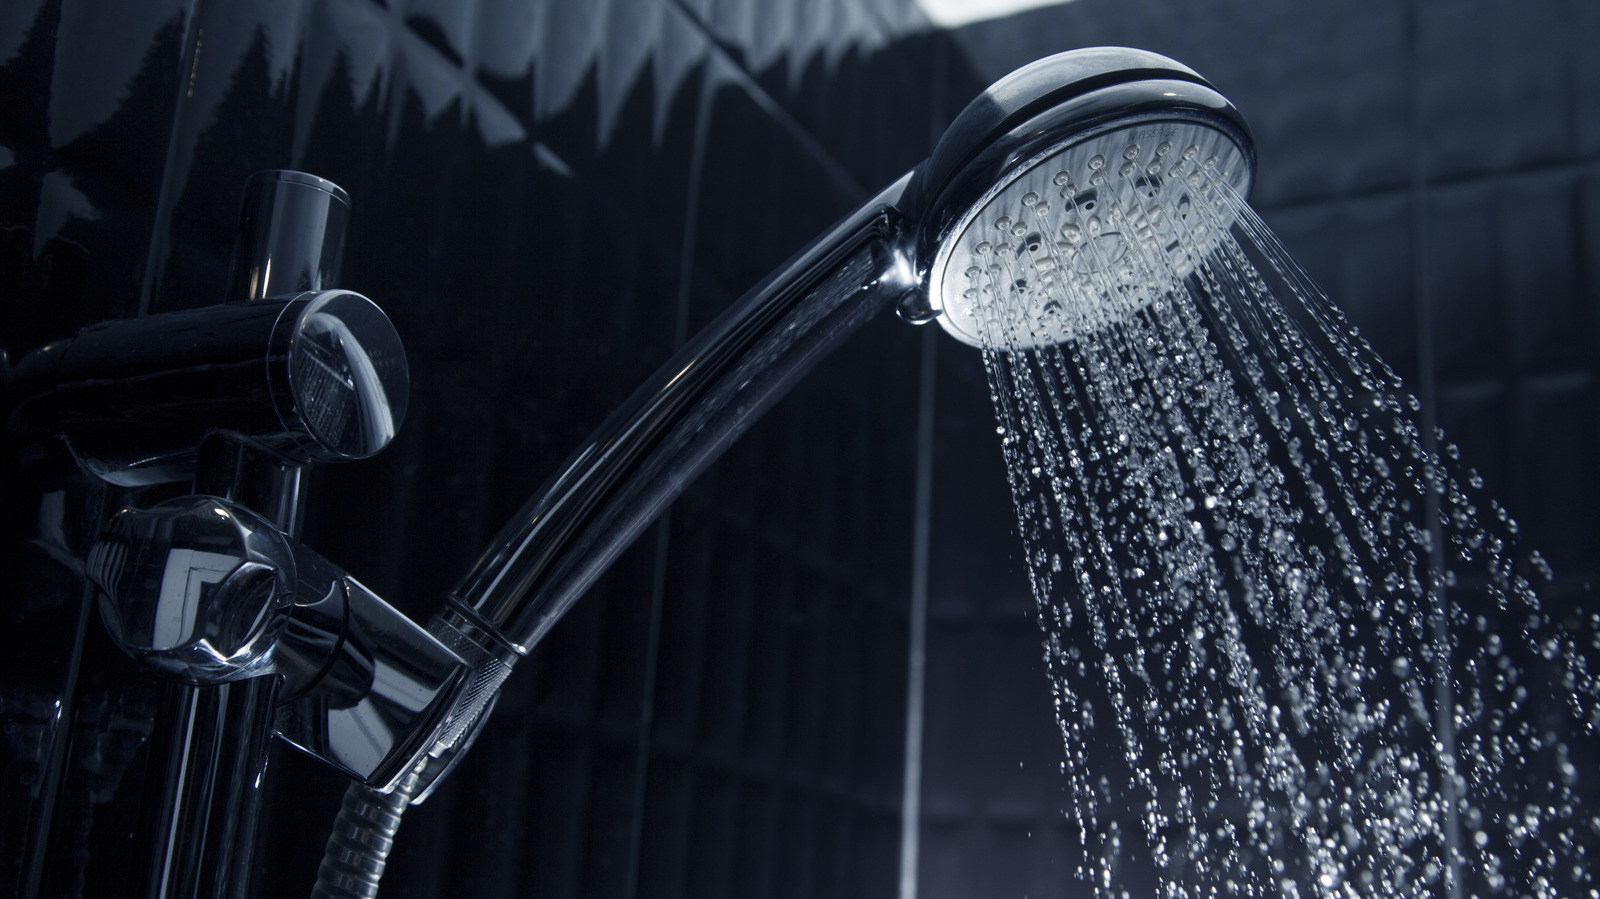 GoShelf Experts Explain the Cost of Shower Niche